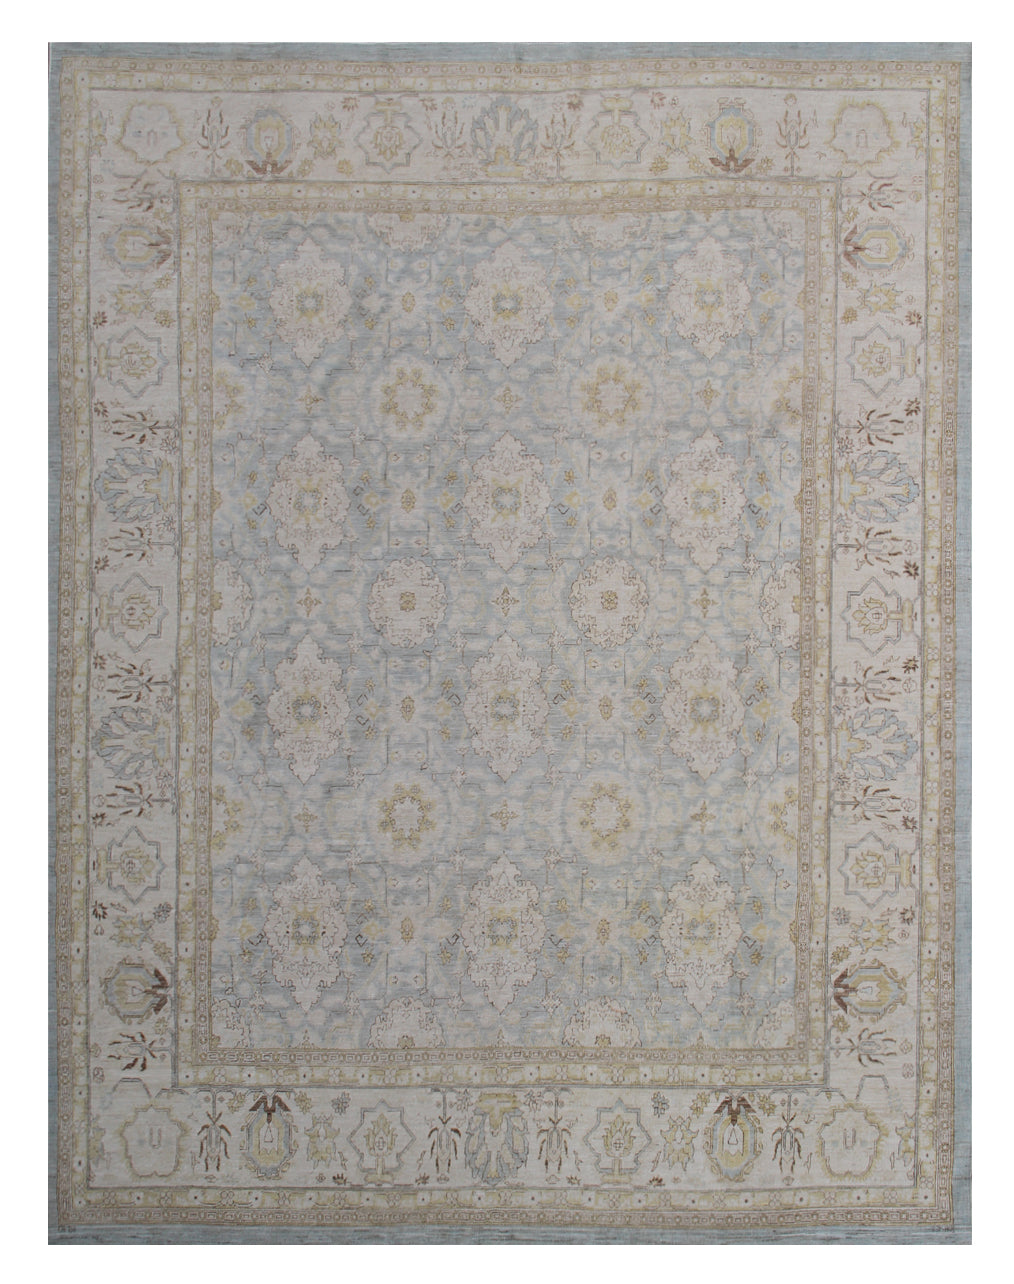 11'x9' Ariana Traditional Fine Agra Design Rug